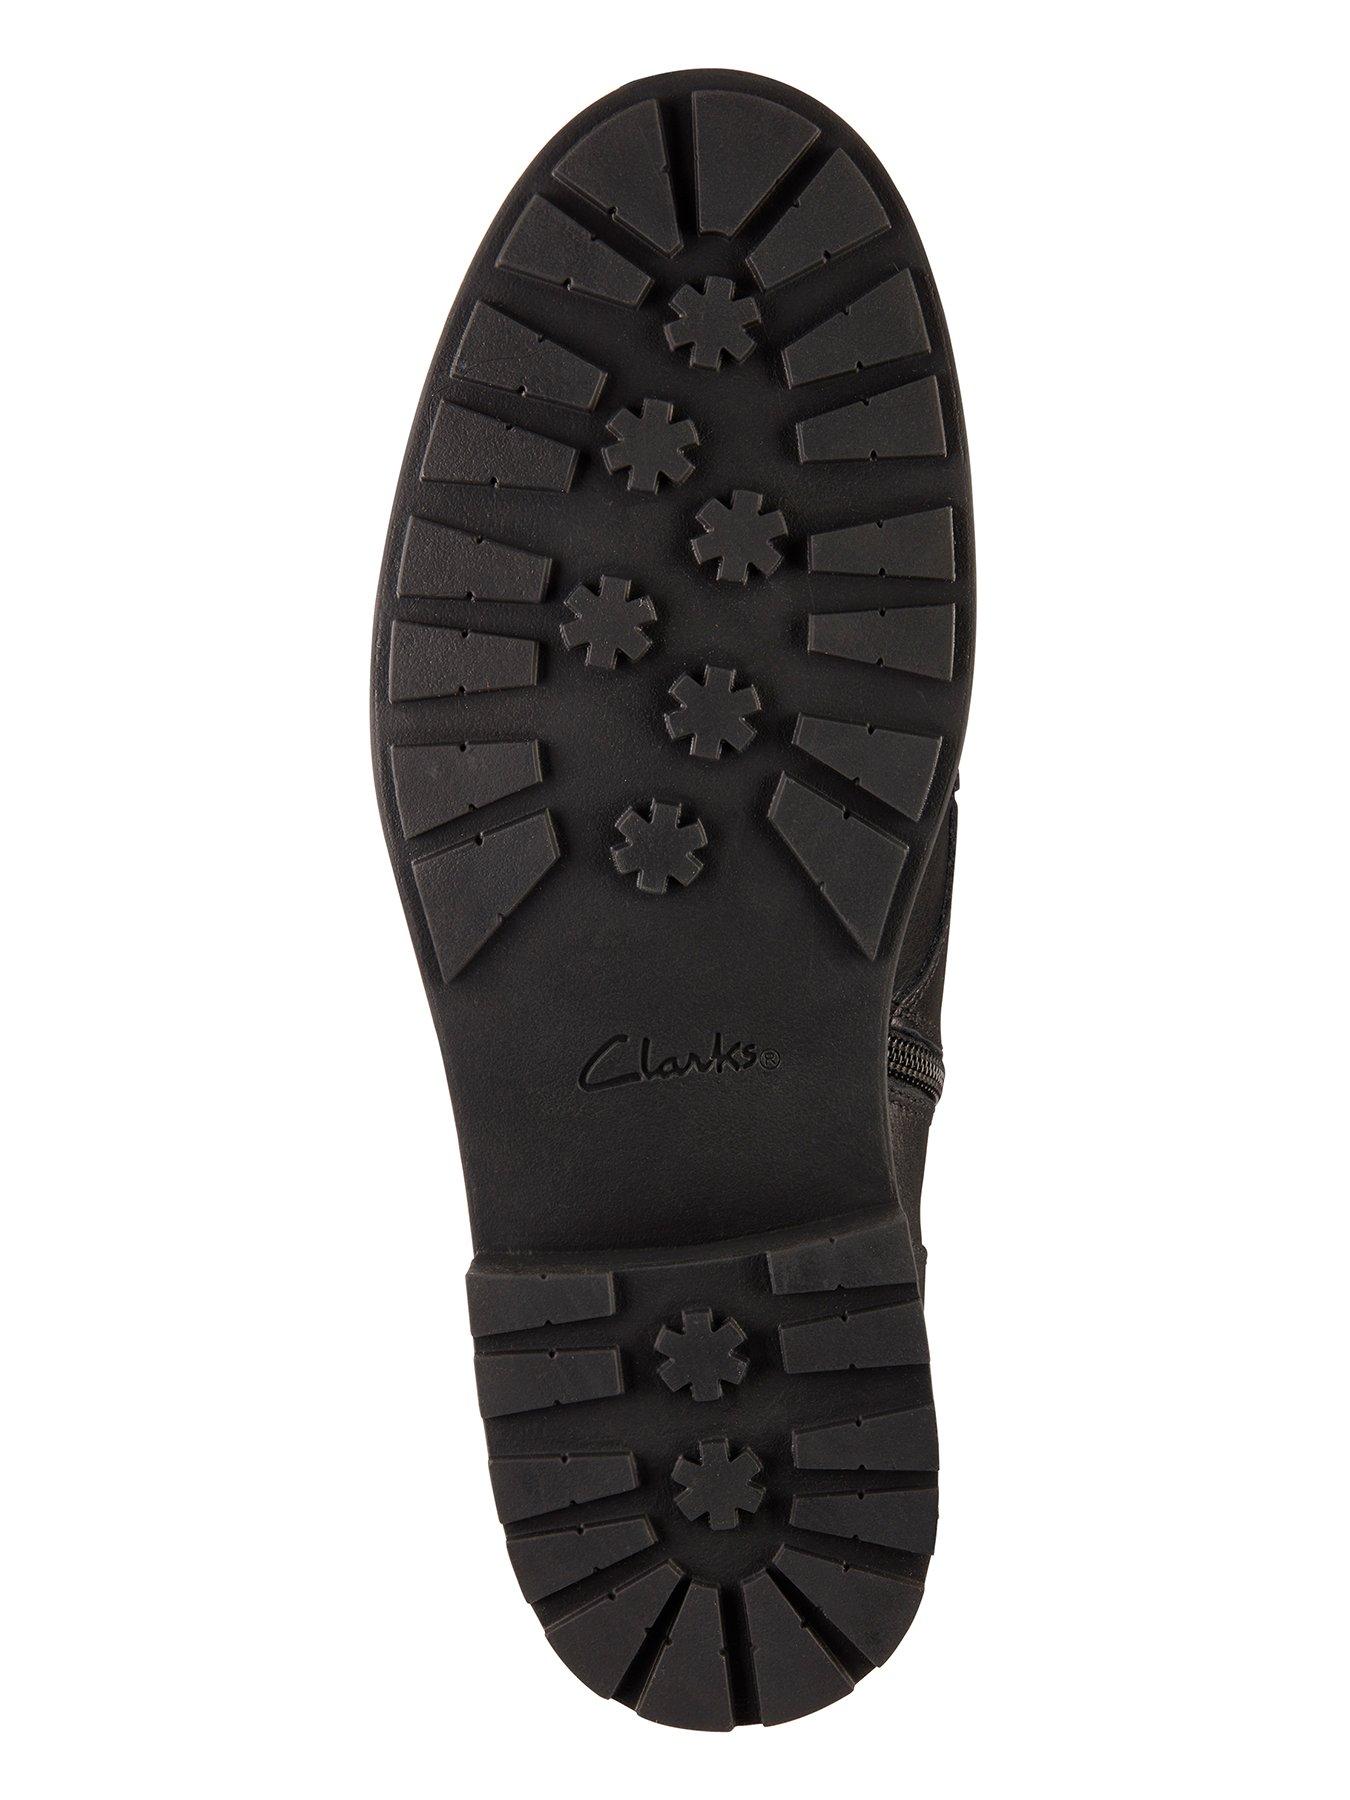  Orinoco2 Style Lace Calf Boot